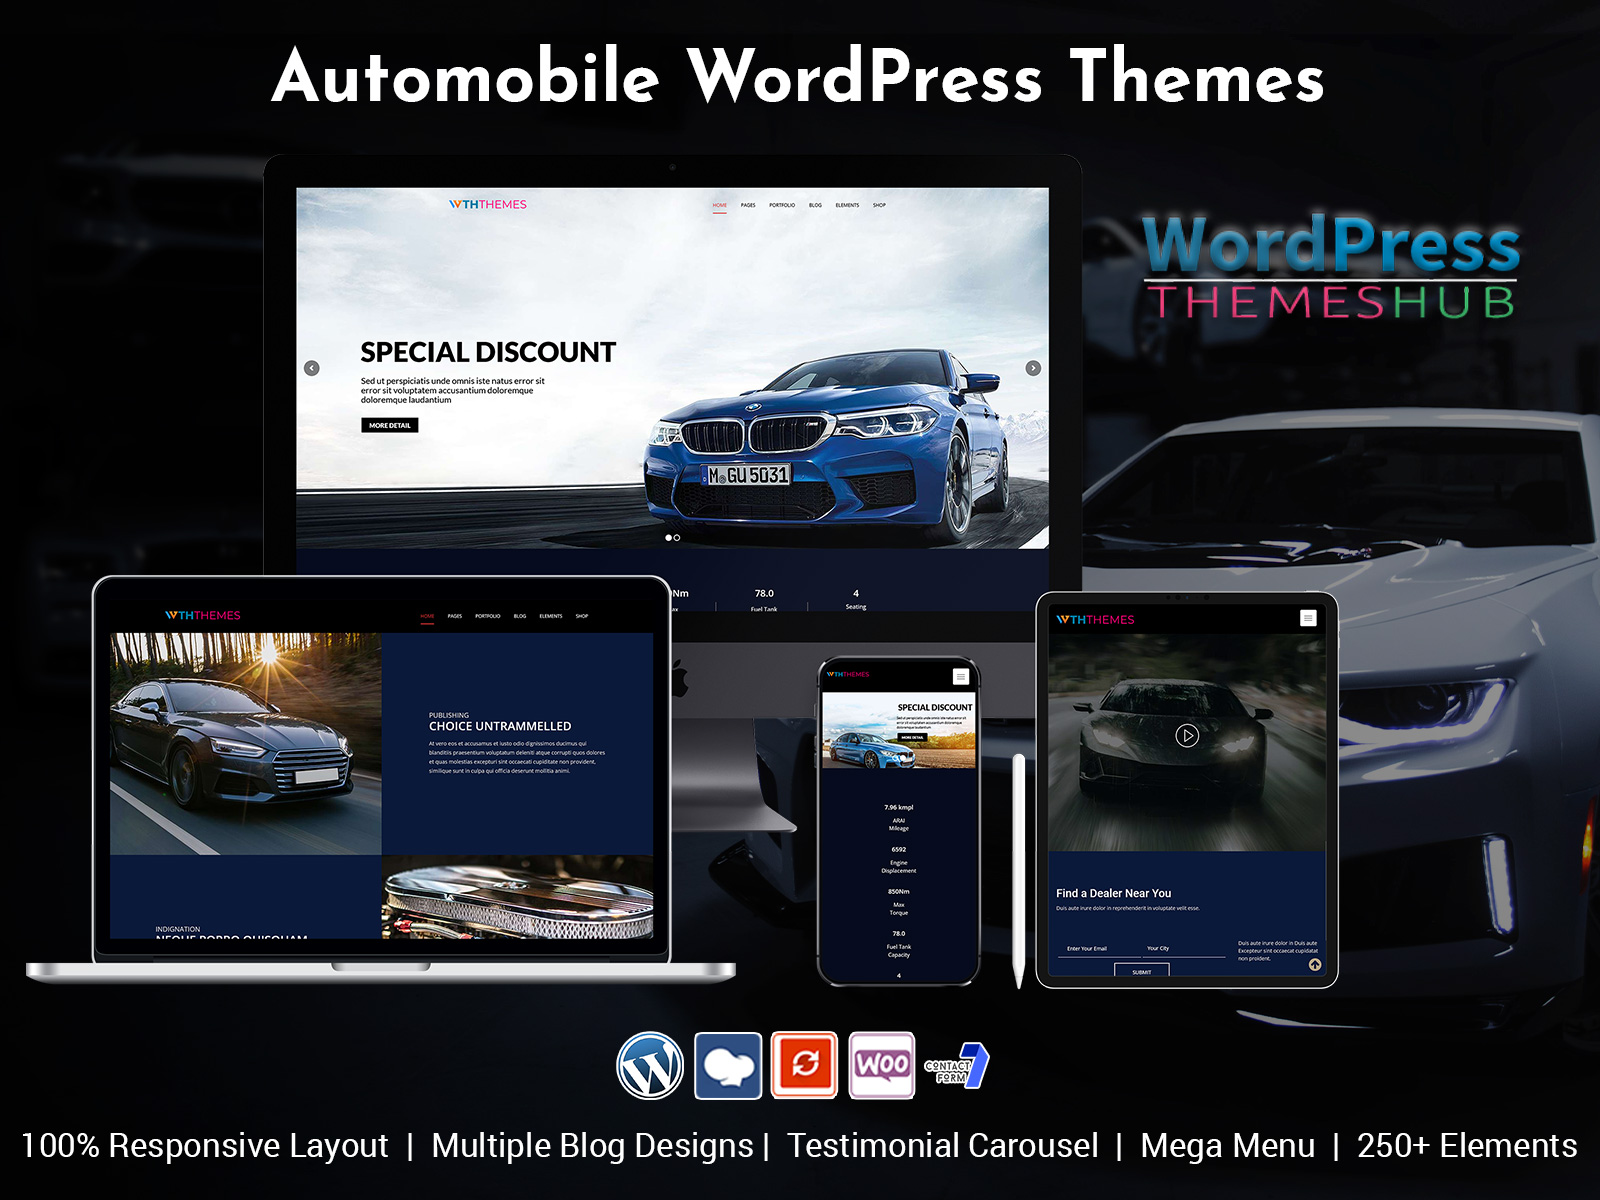 Automobile WordPress Theme To Make Car Dealership Website